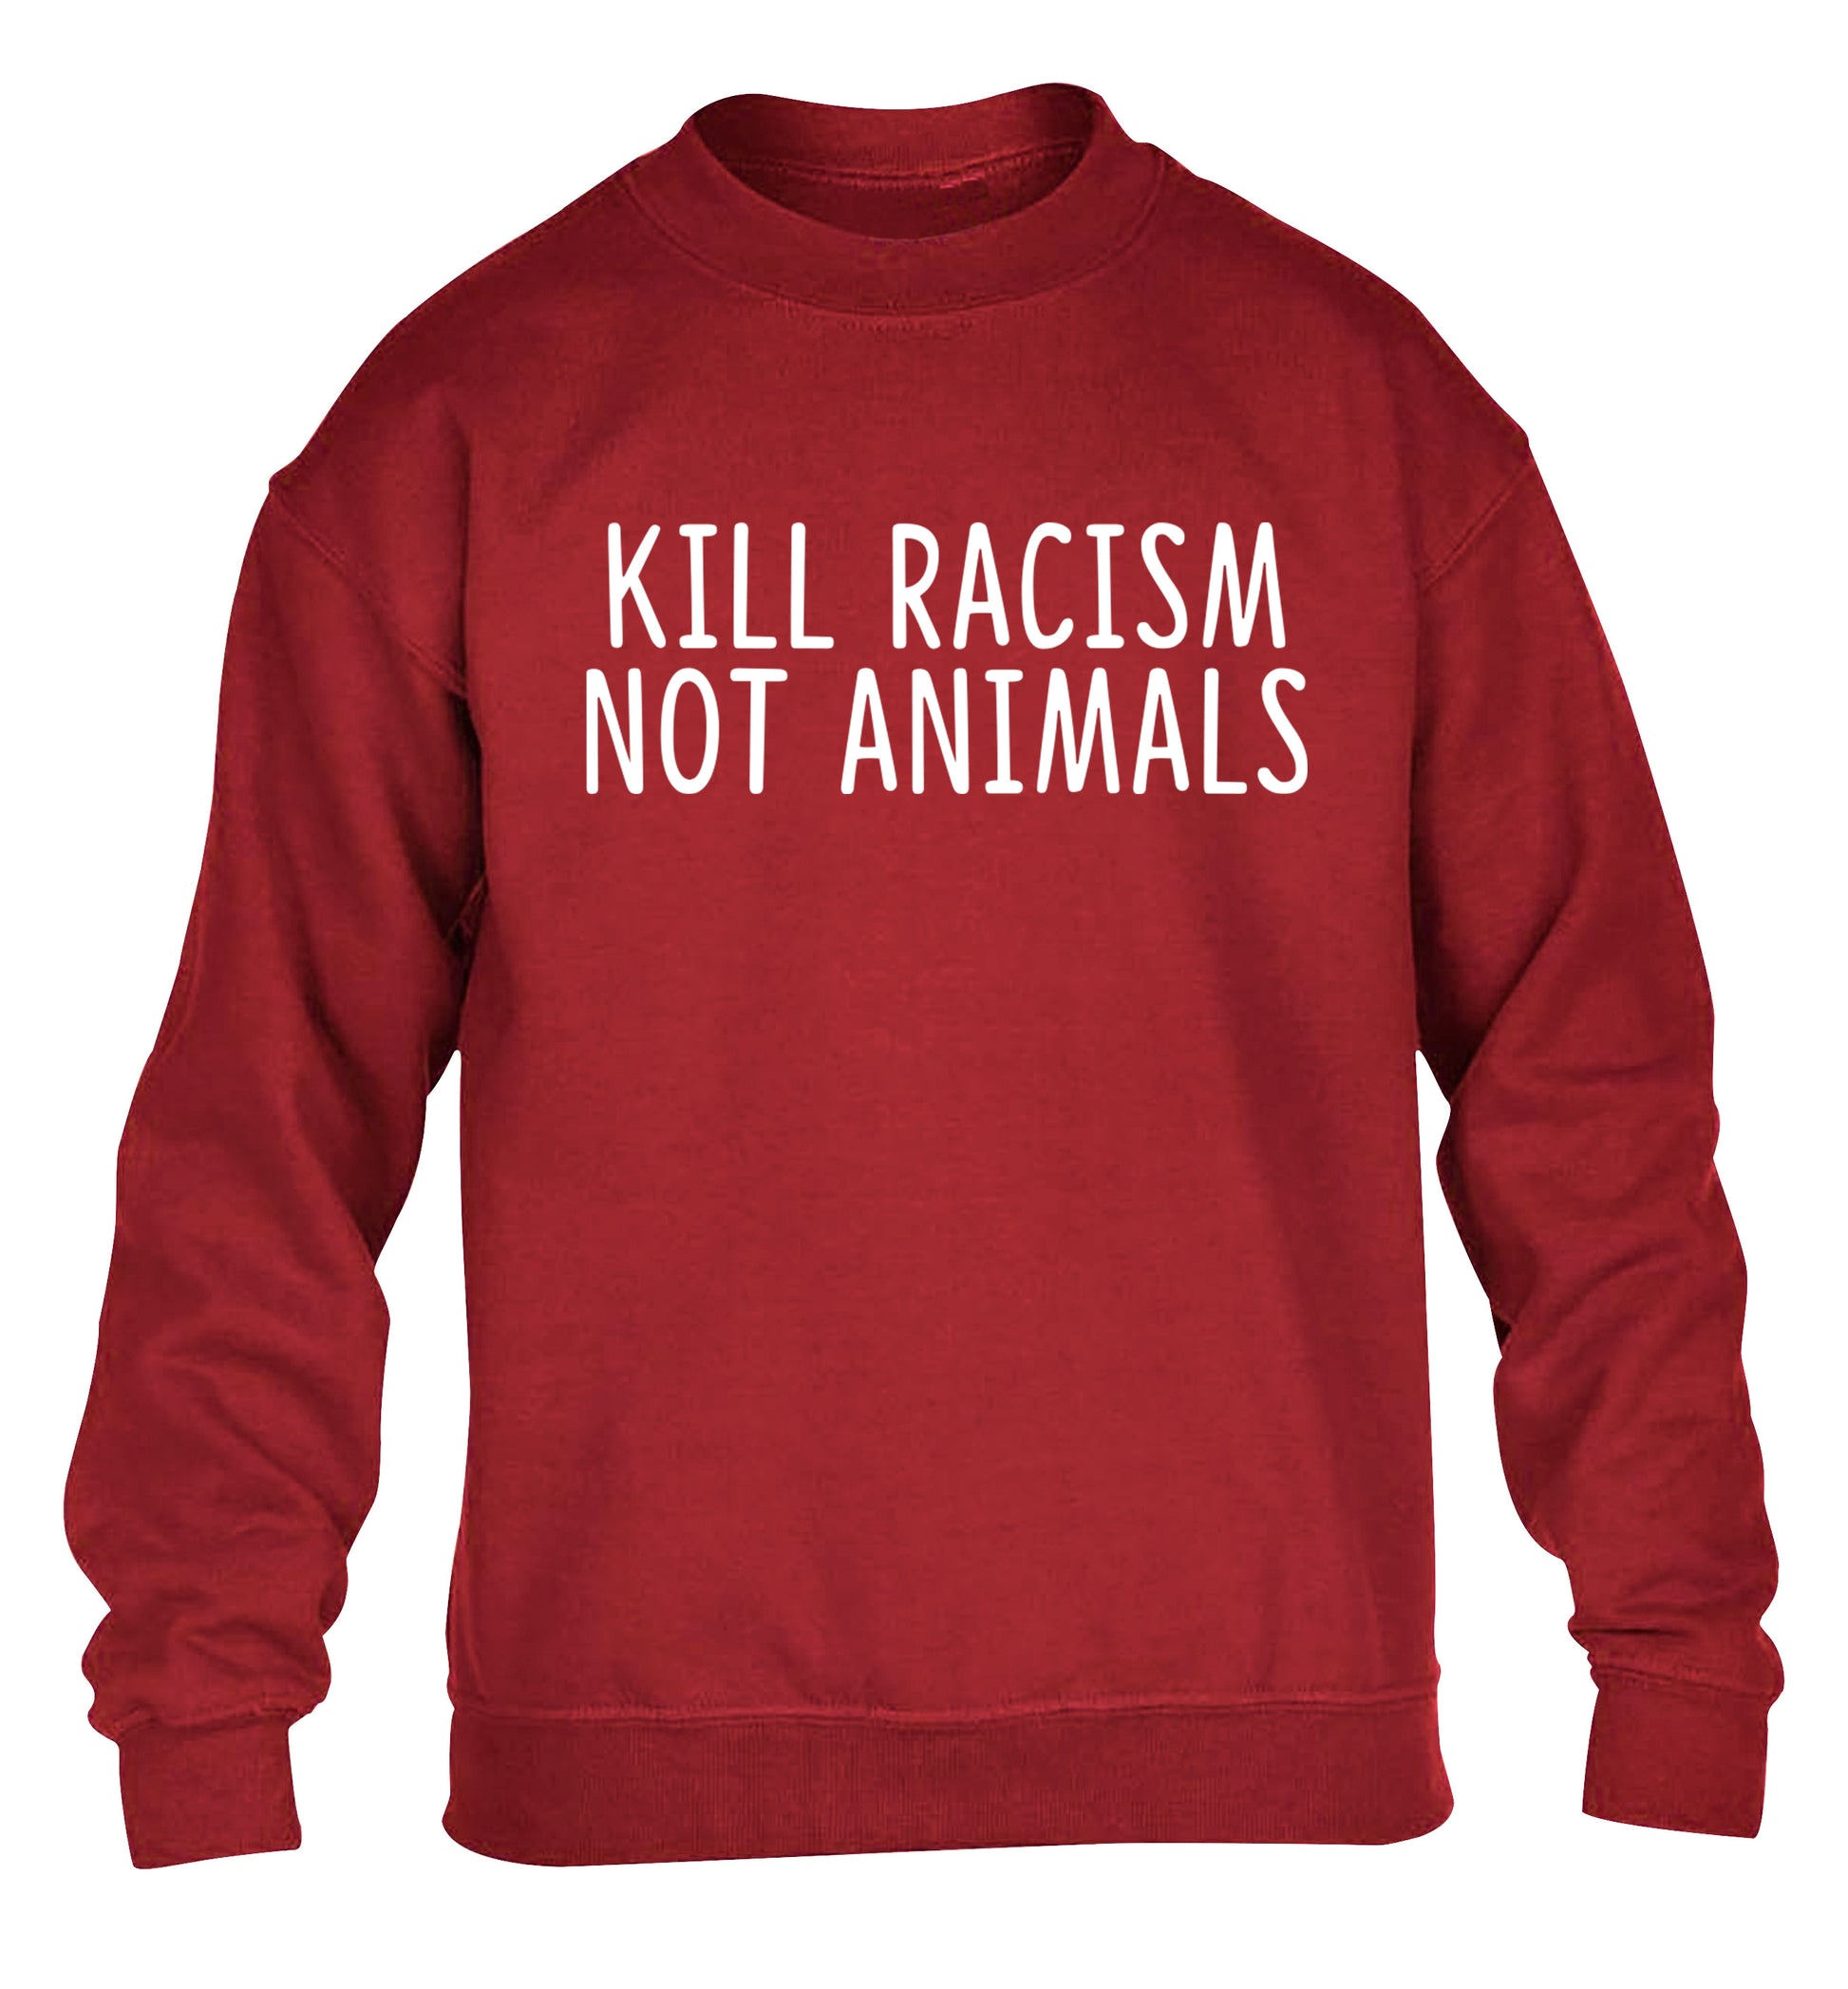 Kill Racism Not Animals children's grey sweater 12-13 Years